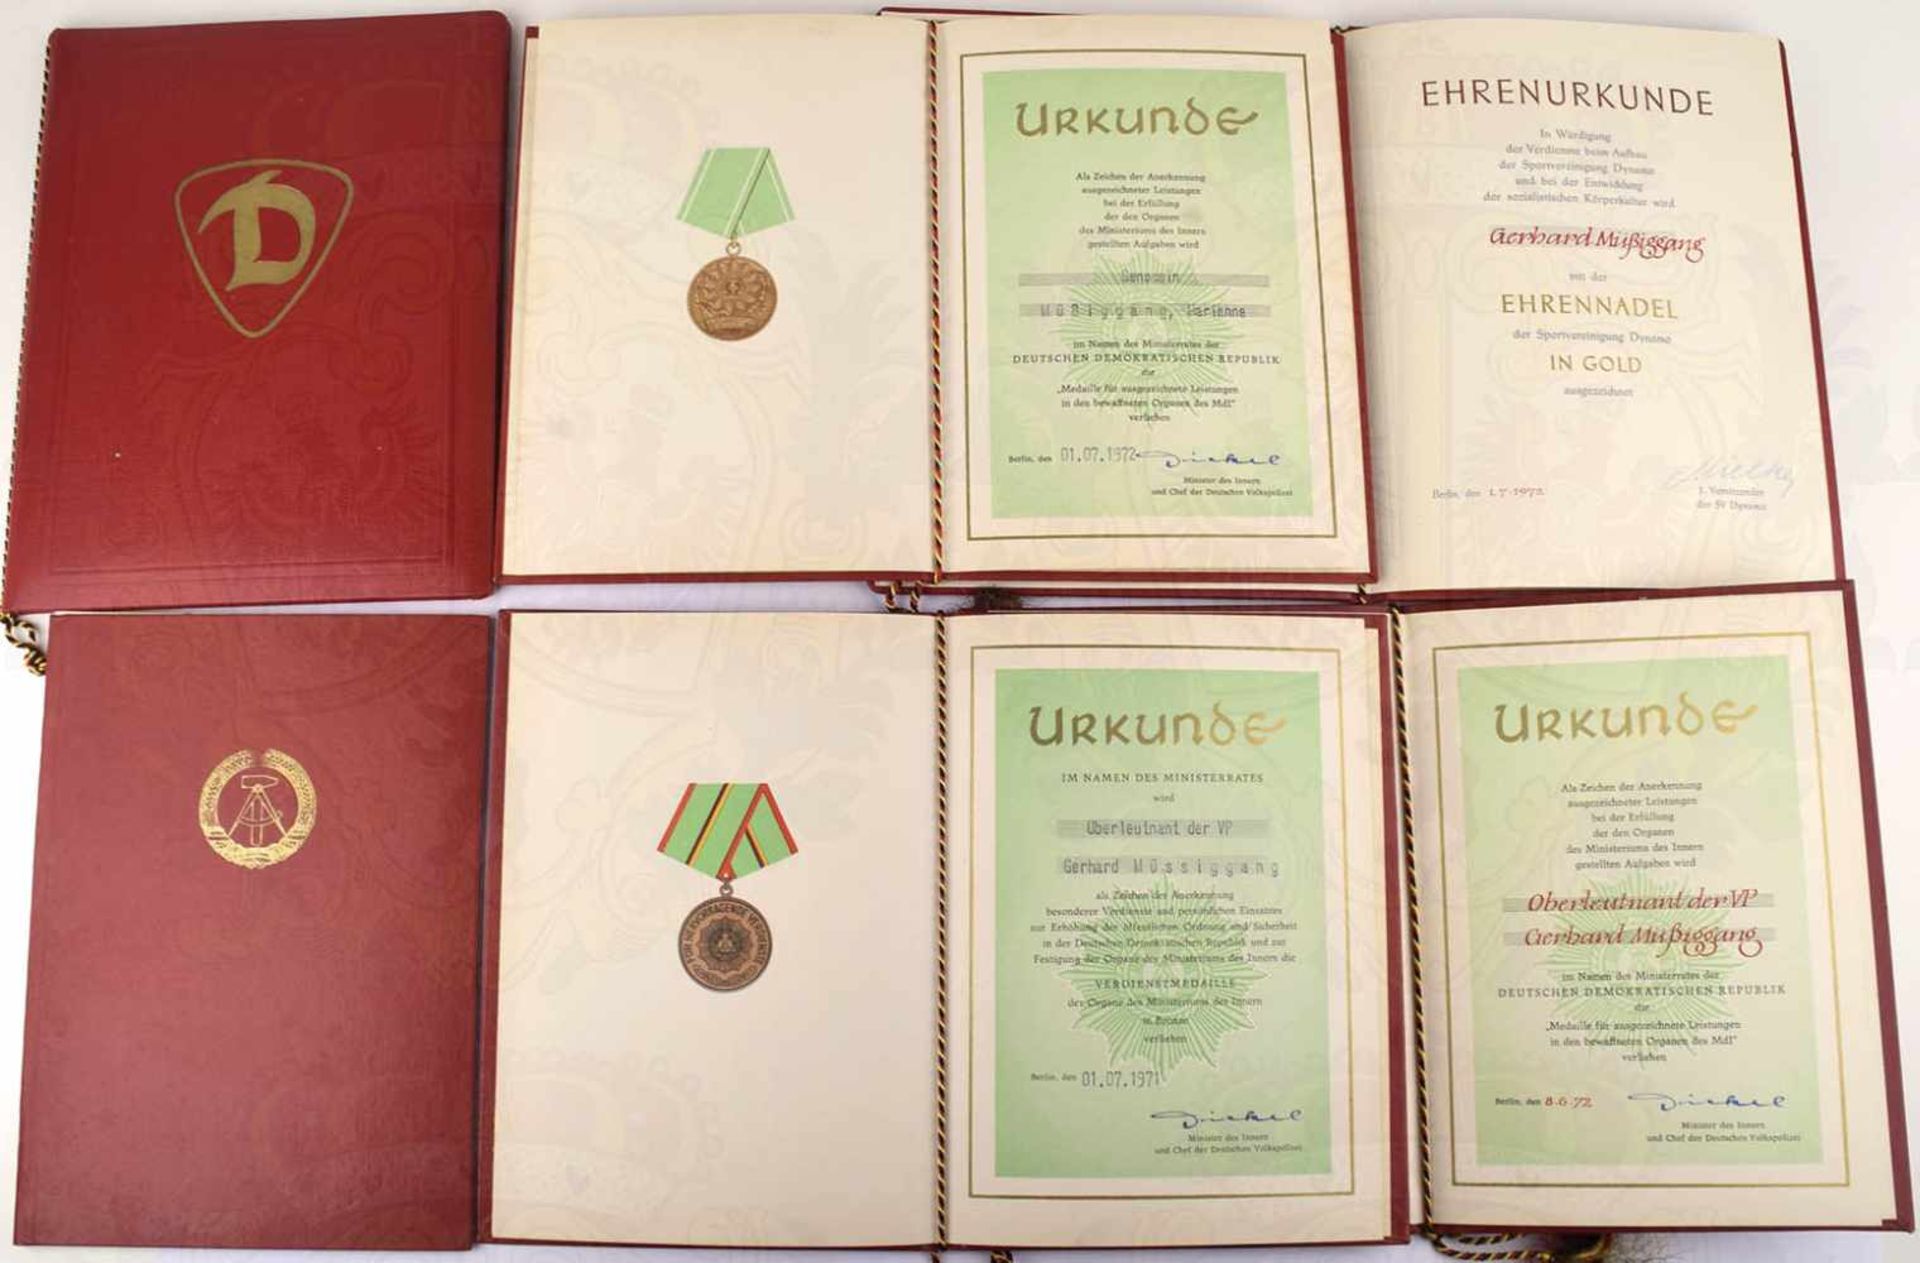 URKUNDENGRUPPE EINES EHEPAARES, ges. 17 Teile, Mann Oberleutnant der VP, 1955-1979, dabei: